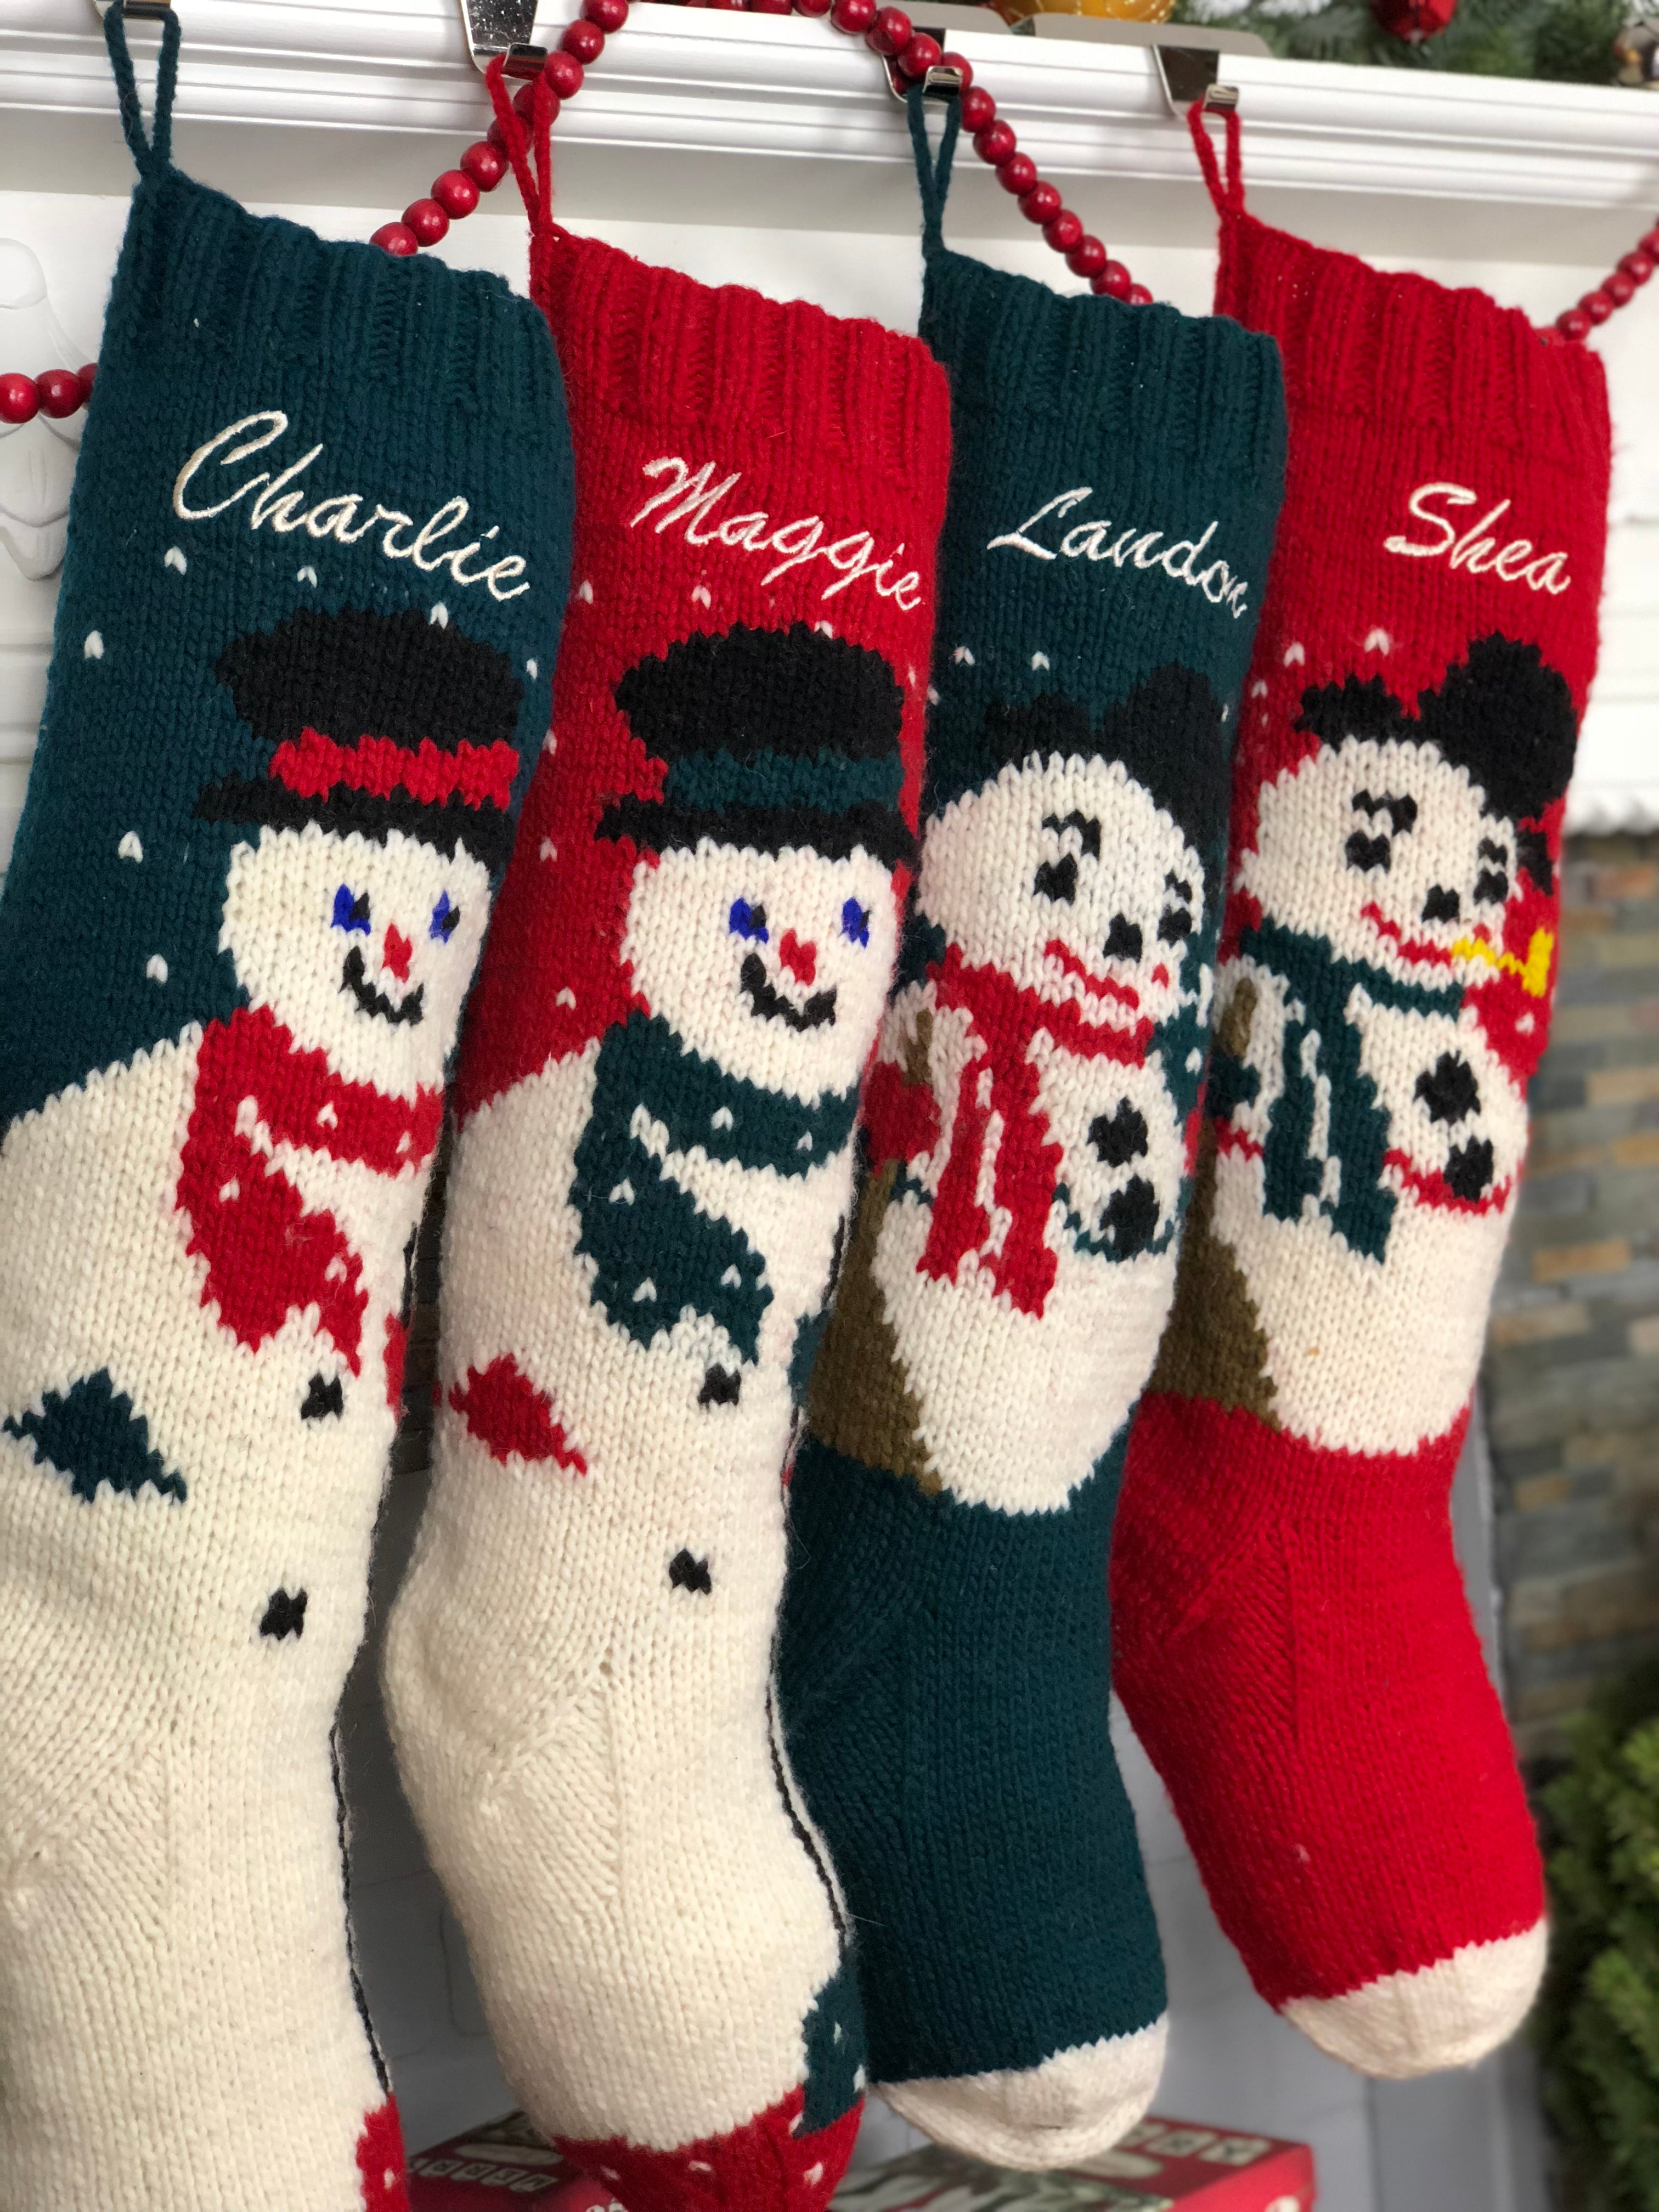 Personalized hand knit snowmen Christmas stockings